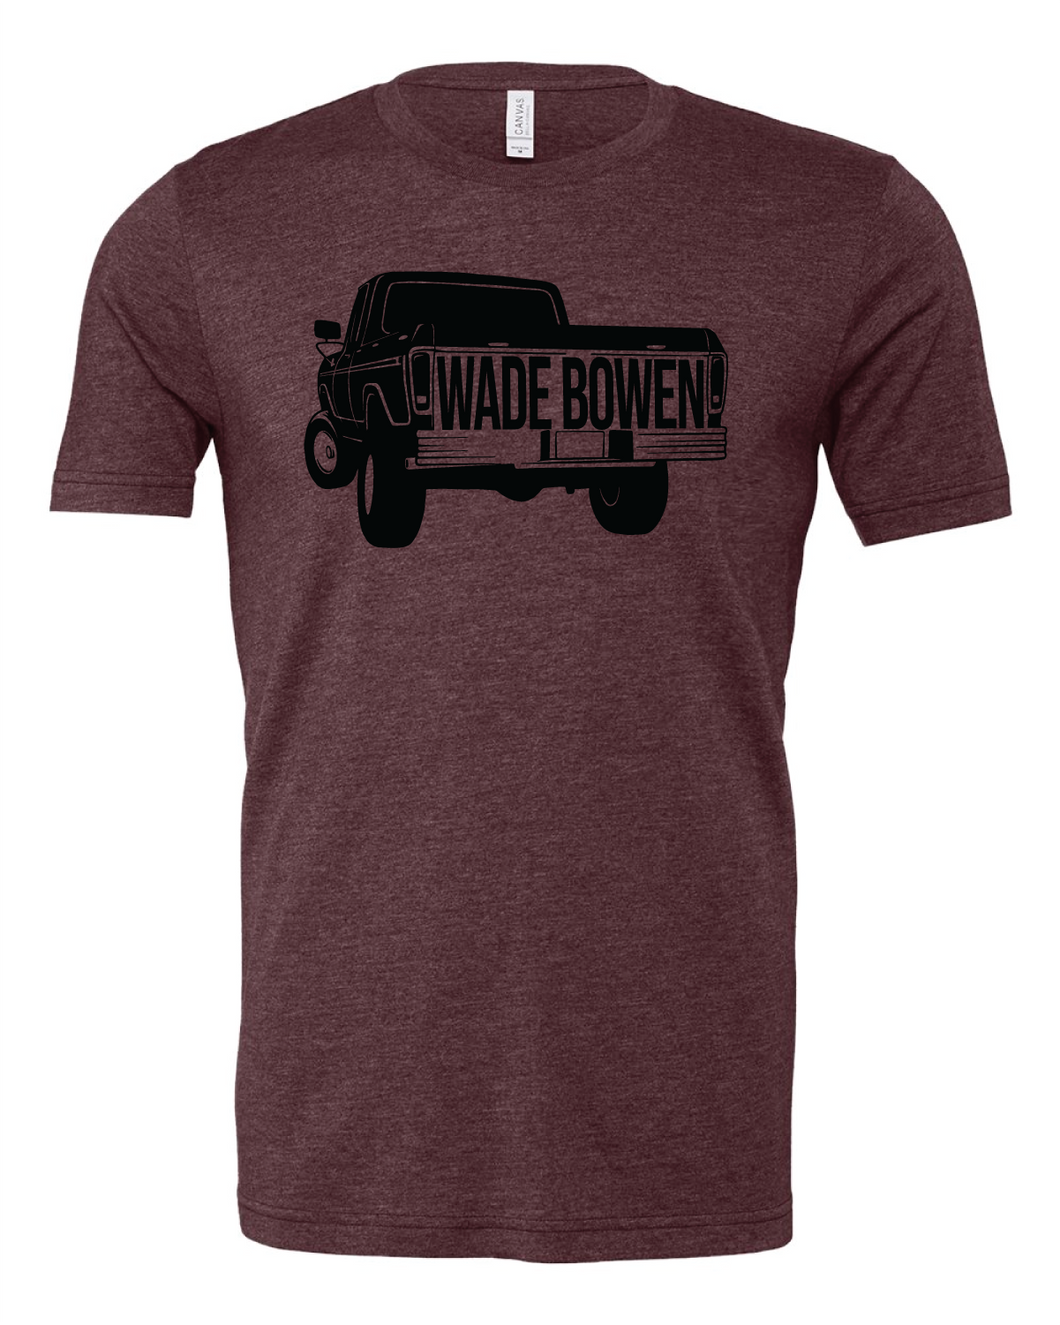 Wade Bowen Vintage Truck